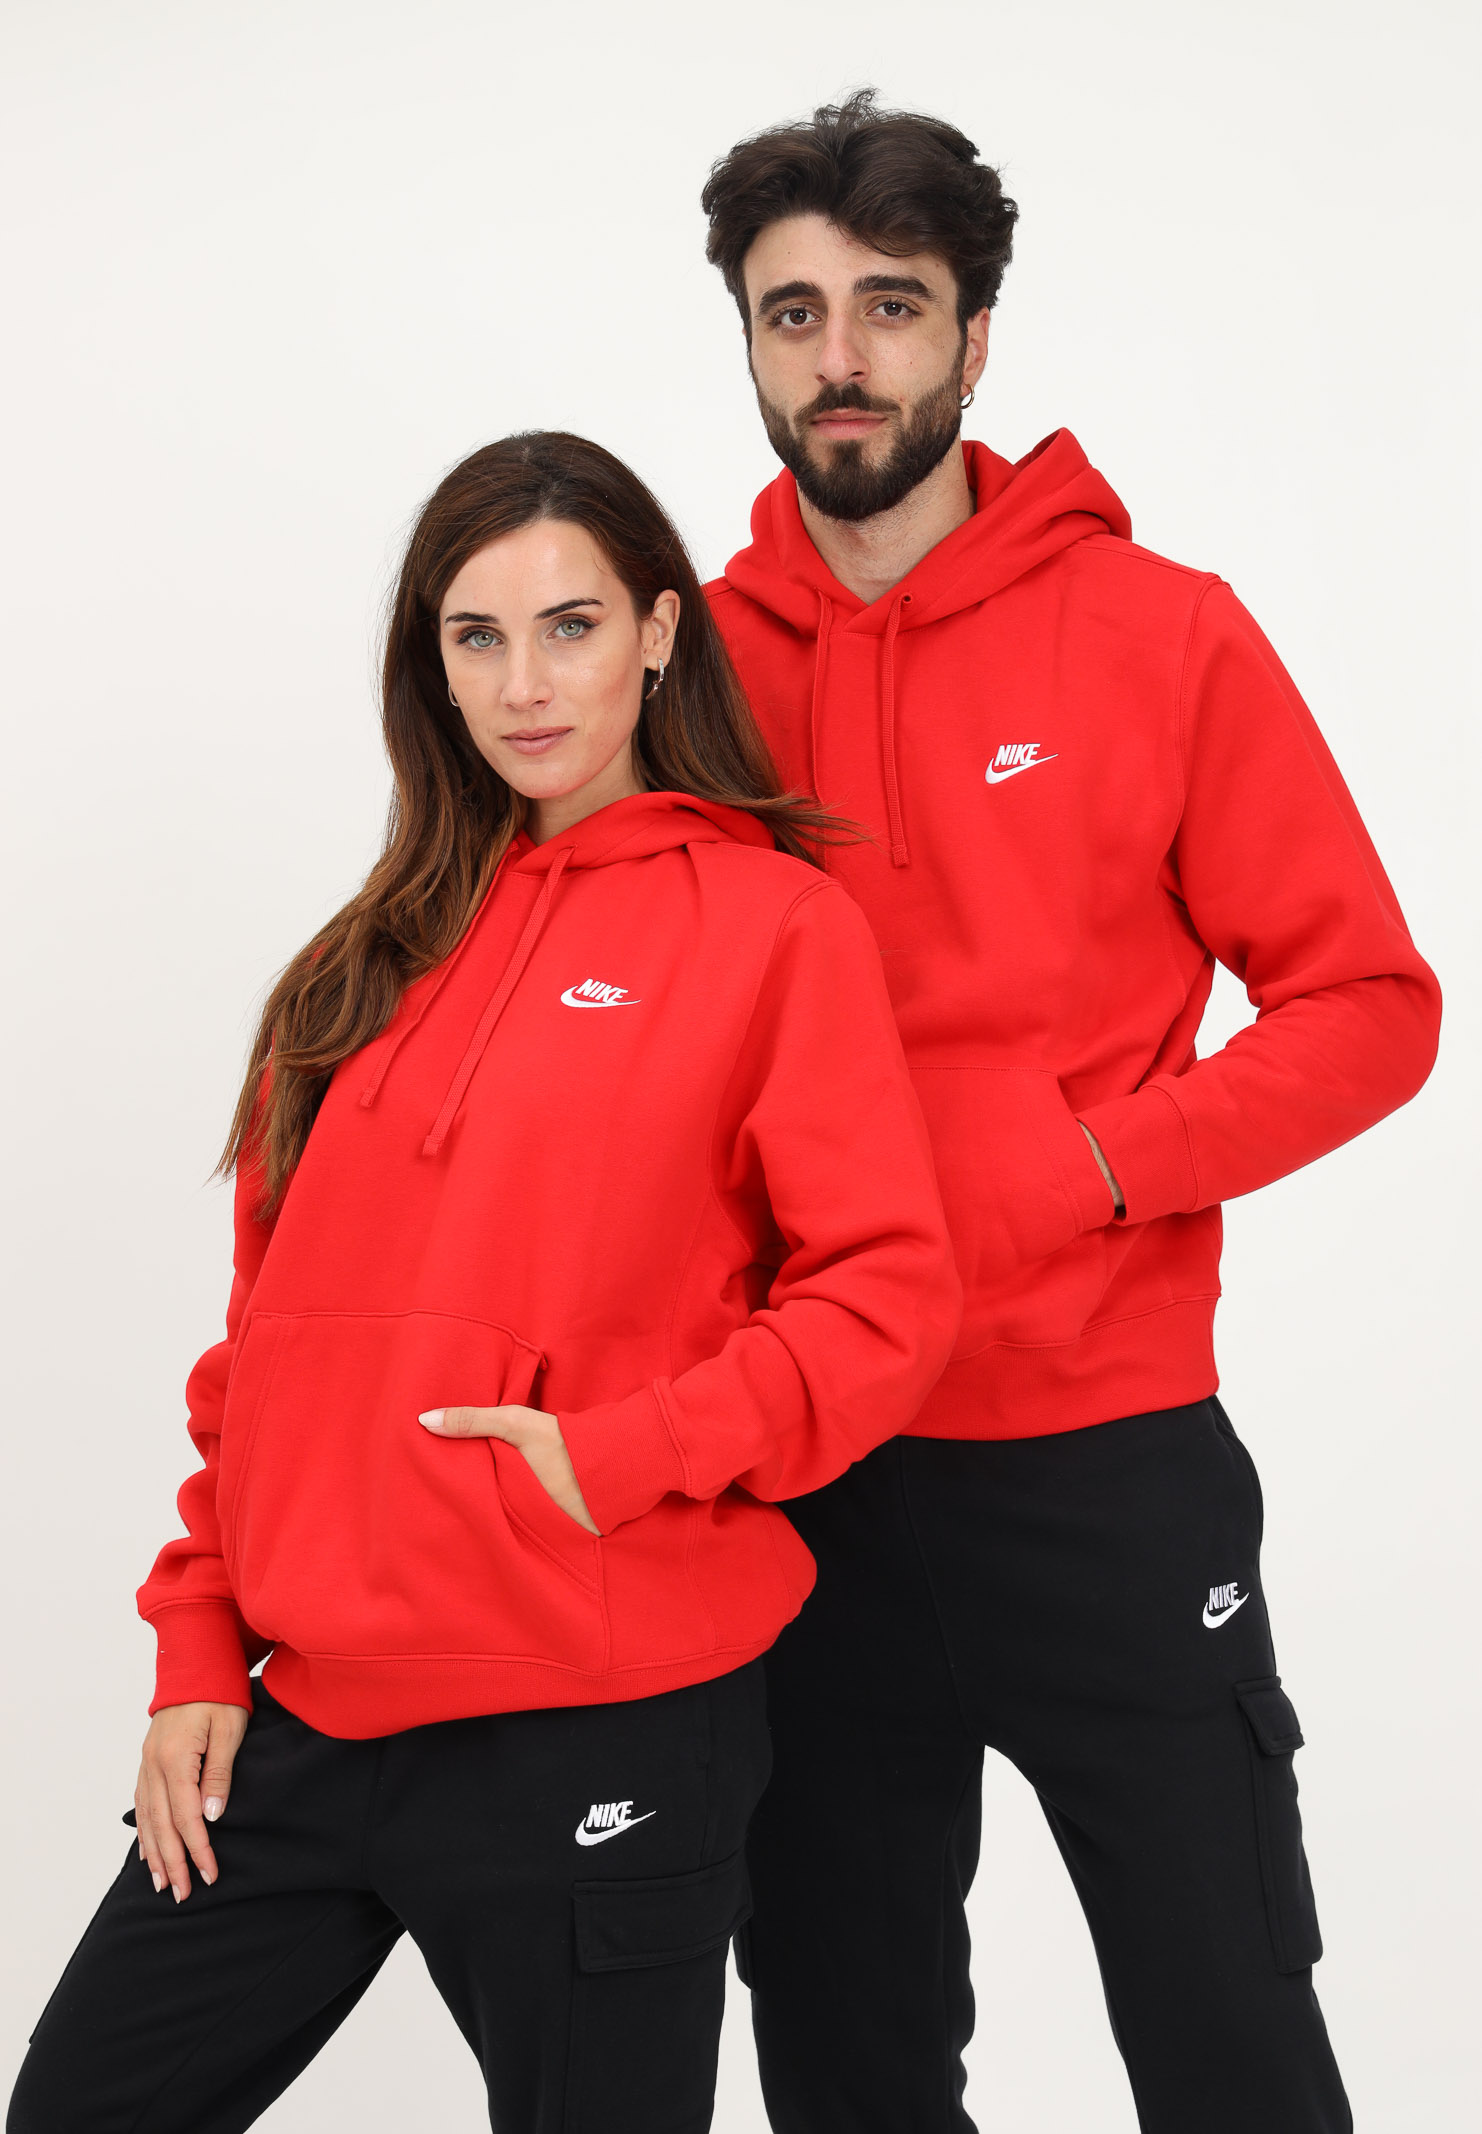 Nike Sportswear Club Fleece hoodie red for men and women - NIKE - Pavidas